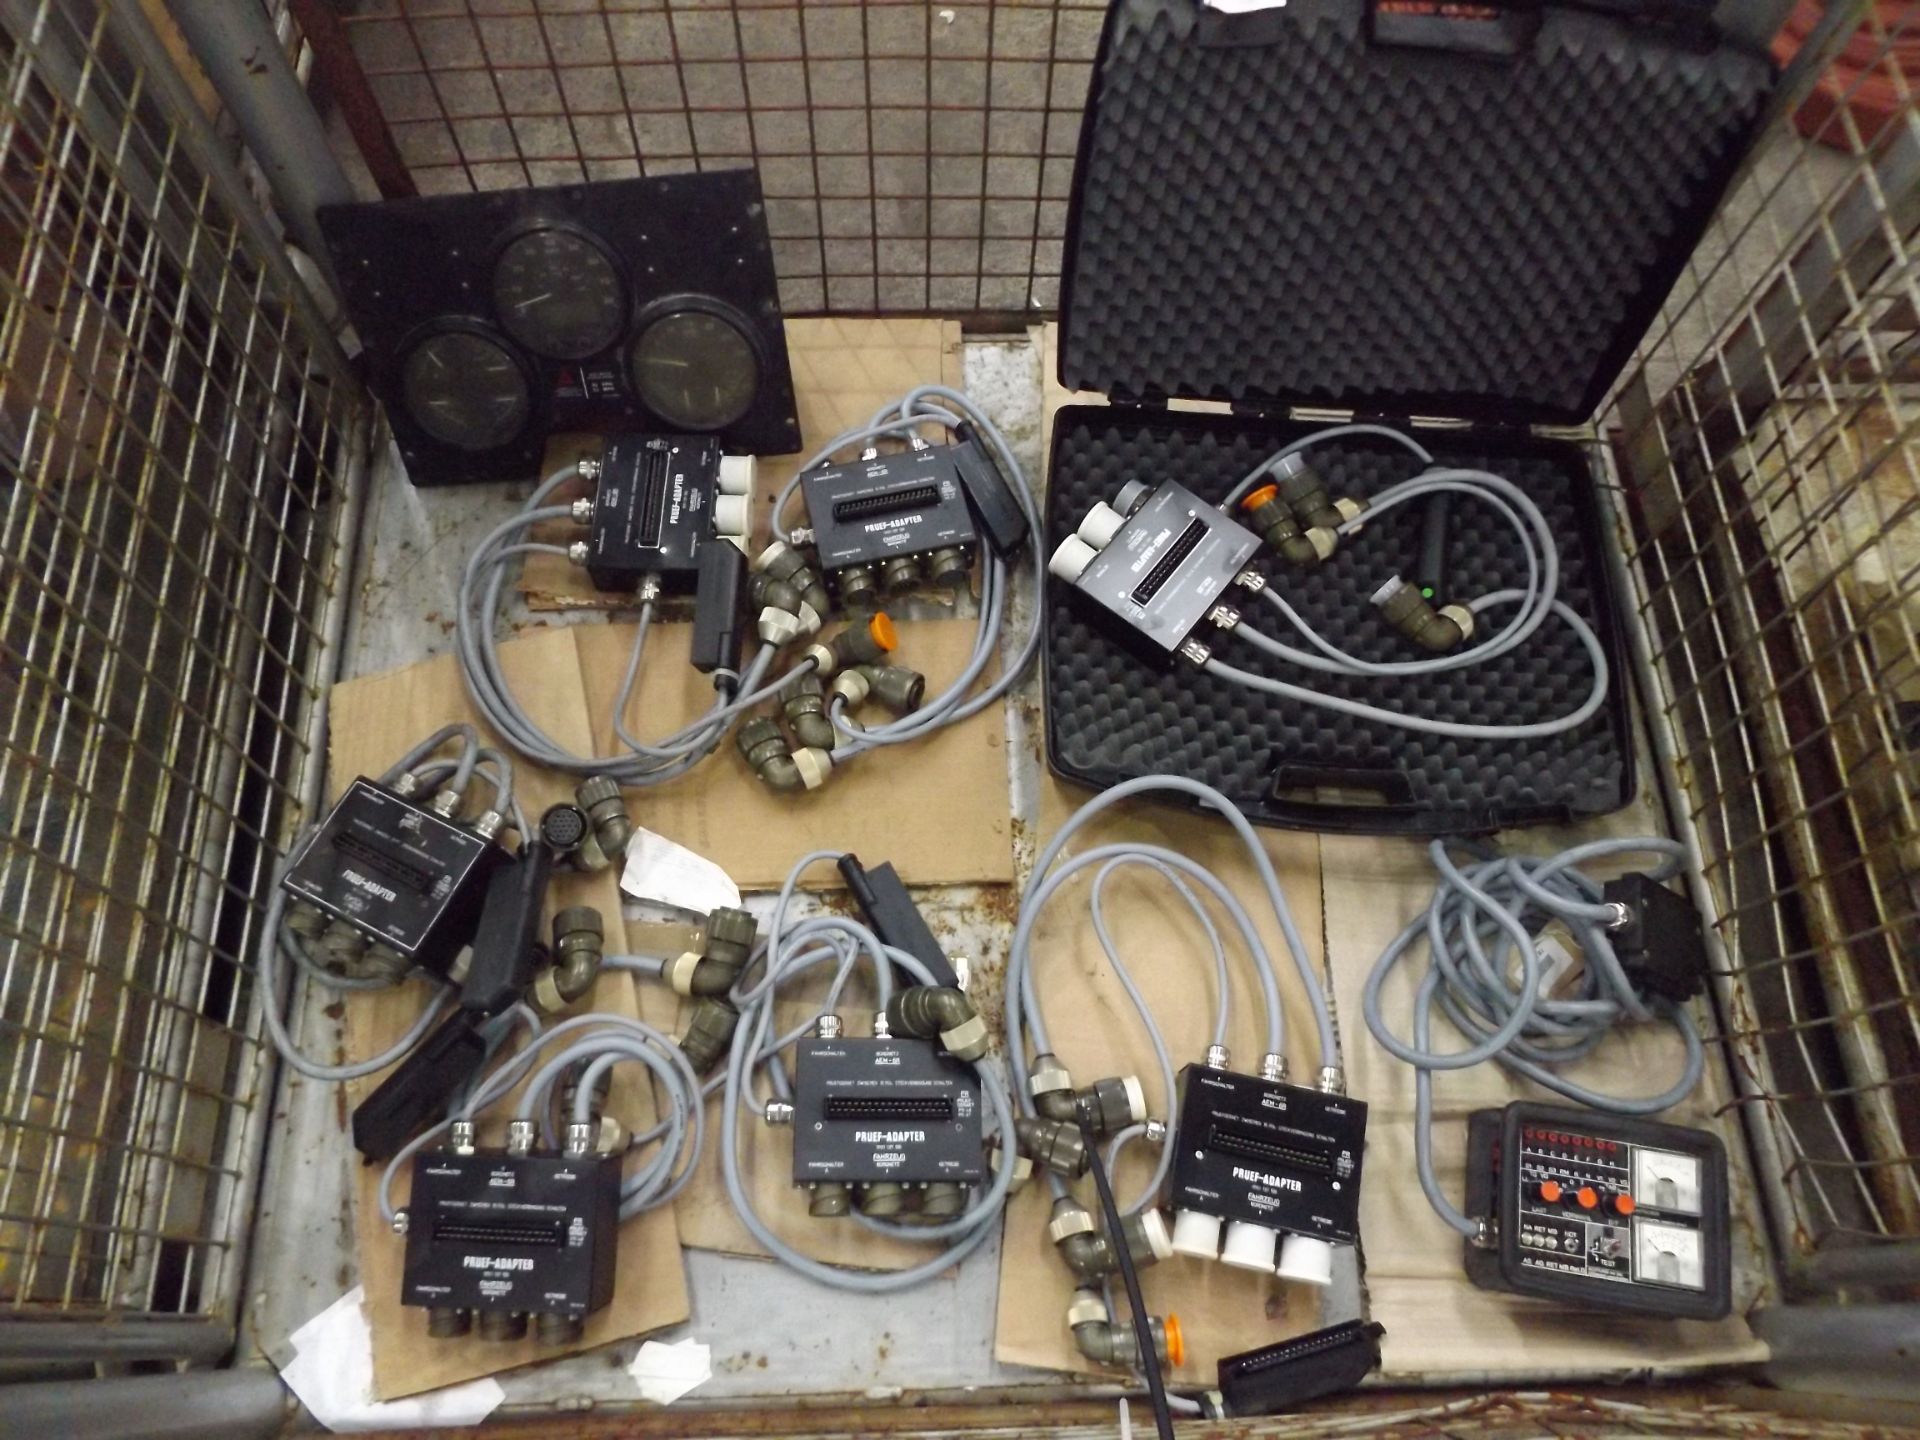 Mixed Stillage of Test Set, Test Adaptors and Instrument Panel